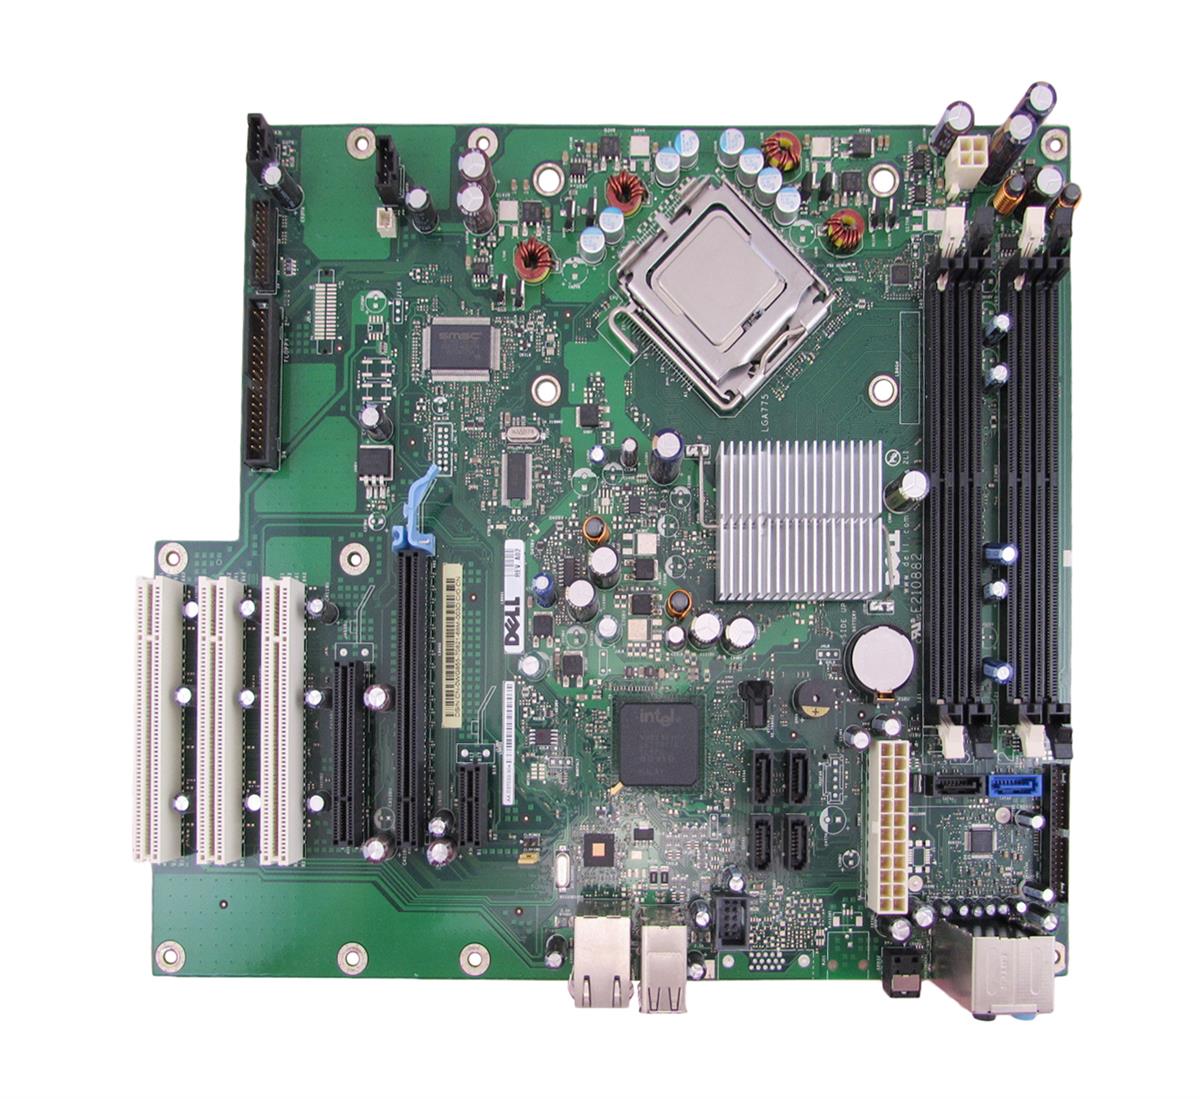 GU142 Dell System Board (Motherboard) for Dimension 9200, XPS 410 (Refurbished)